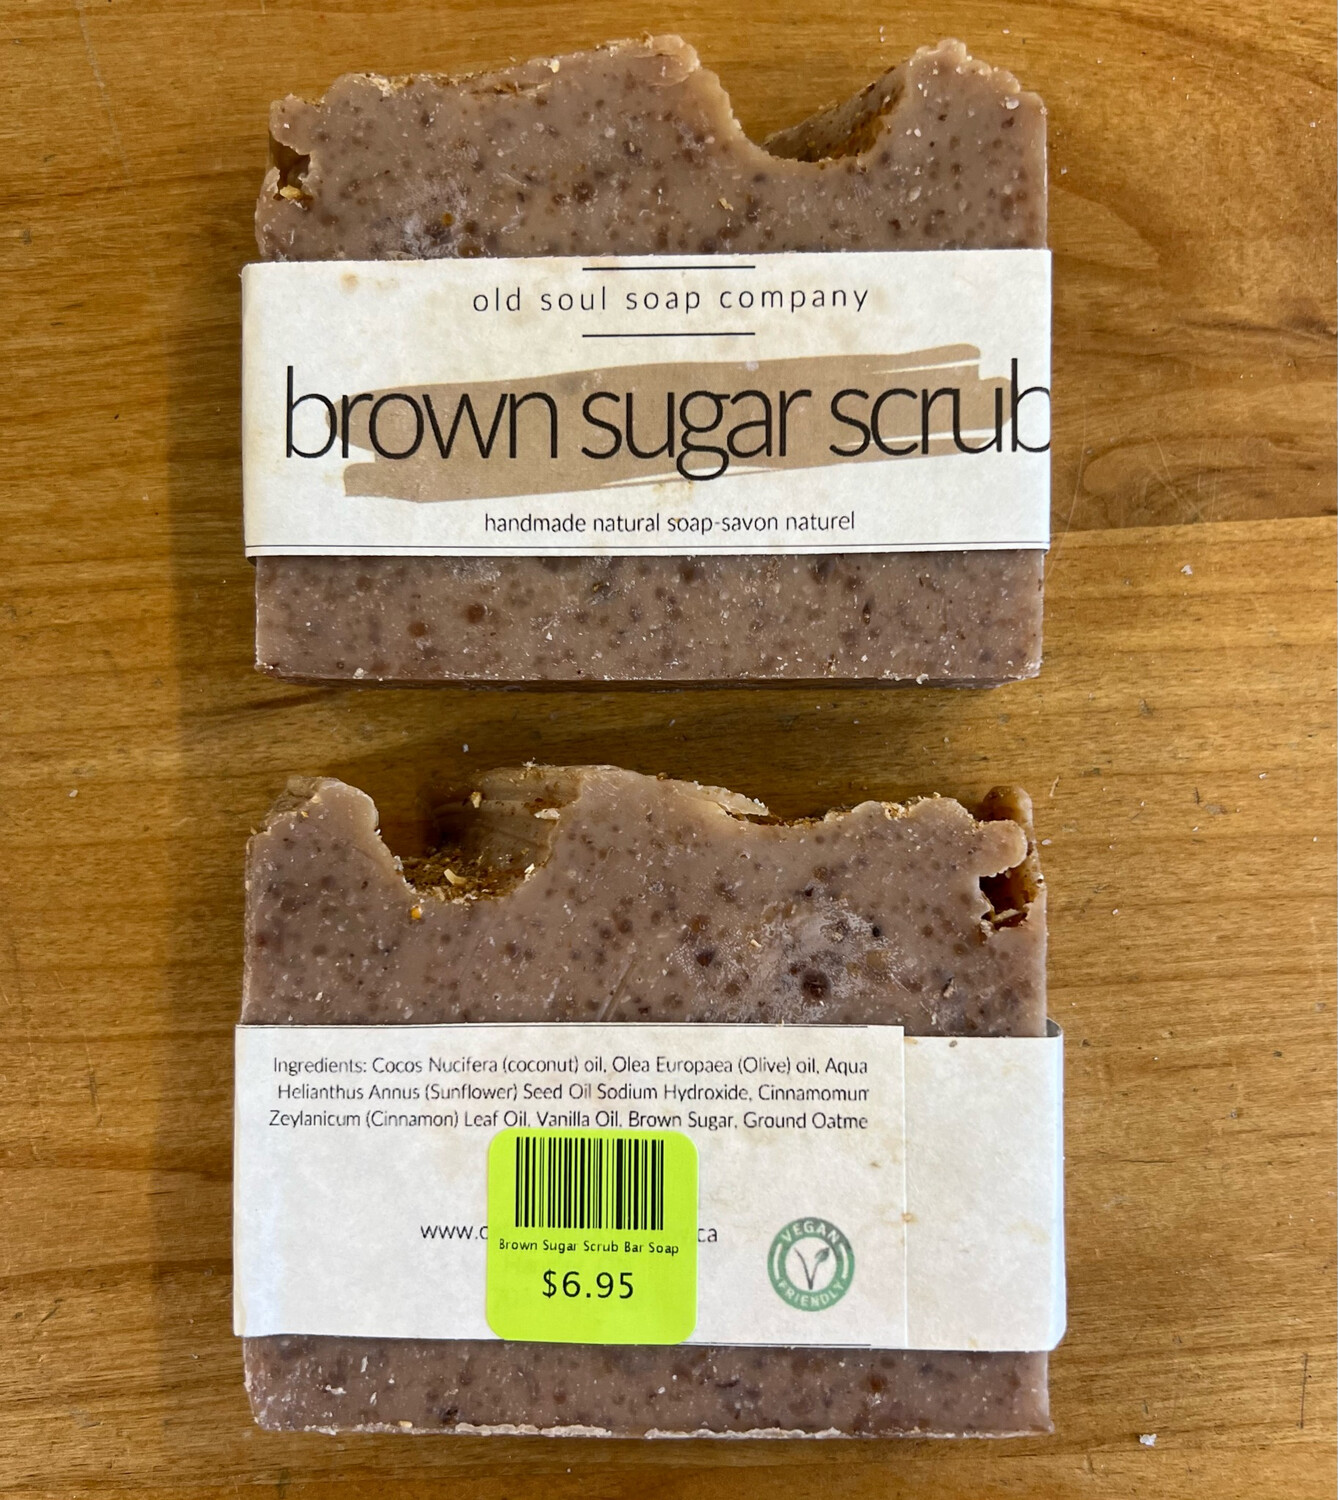 Brown Sugar Scrub Bar Soap